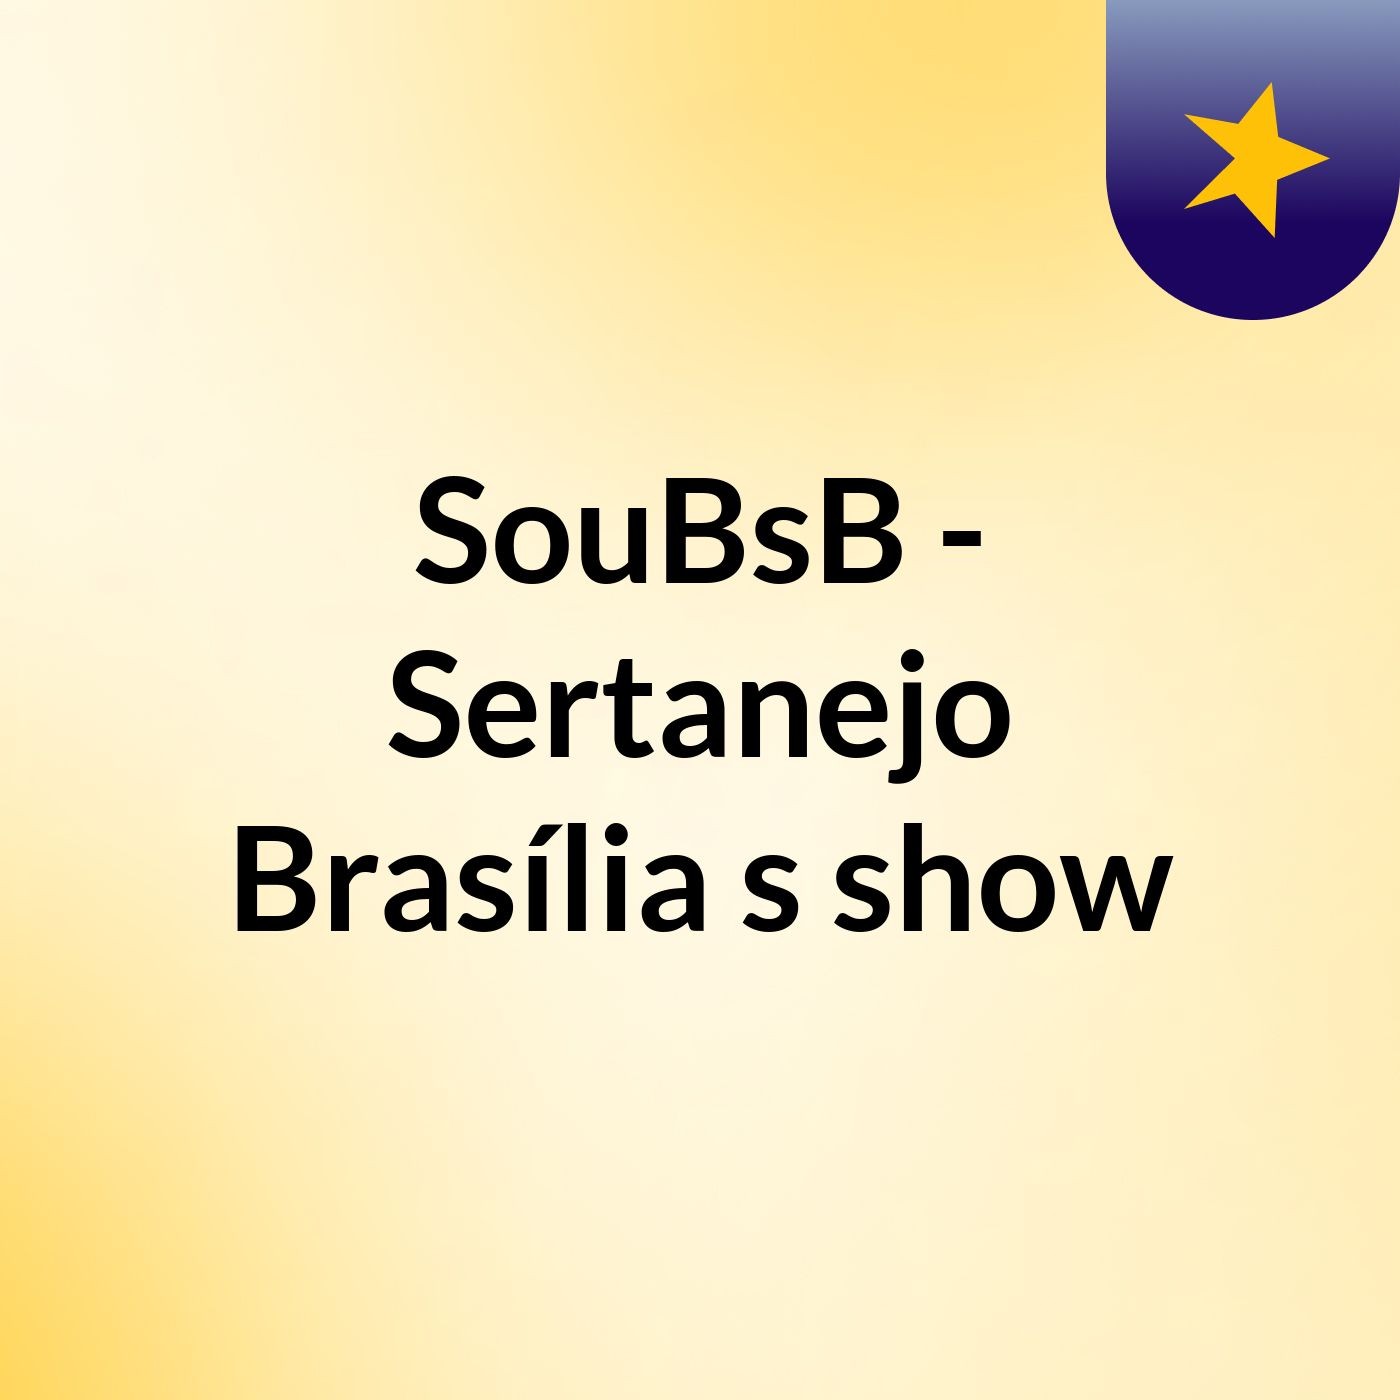 SouBsB - Sertanejo Brasília's show